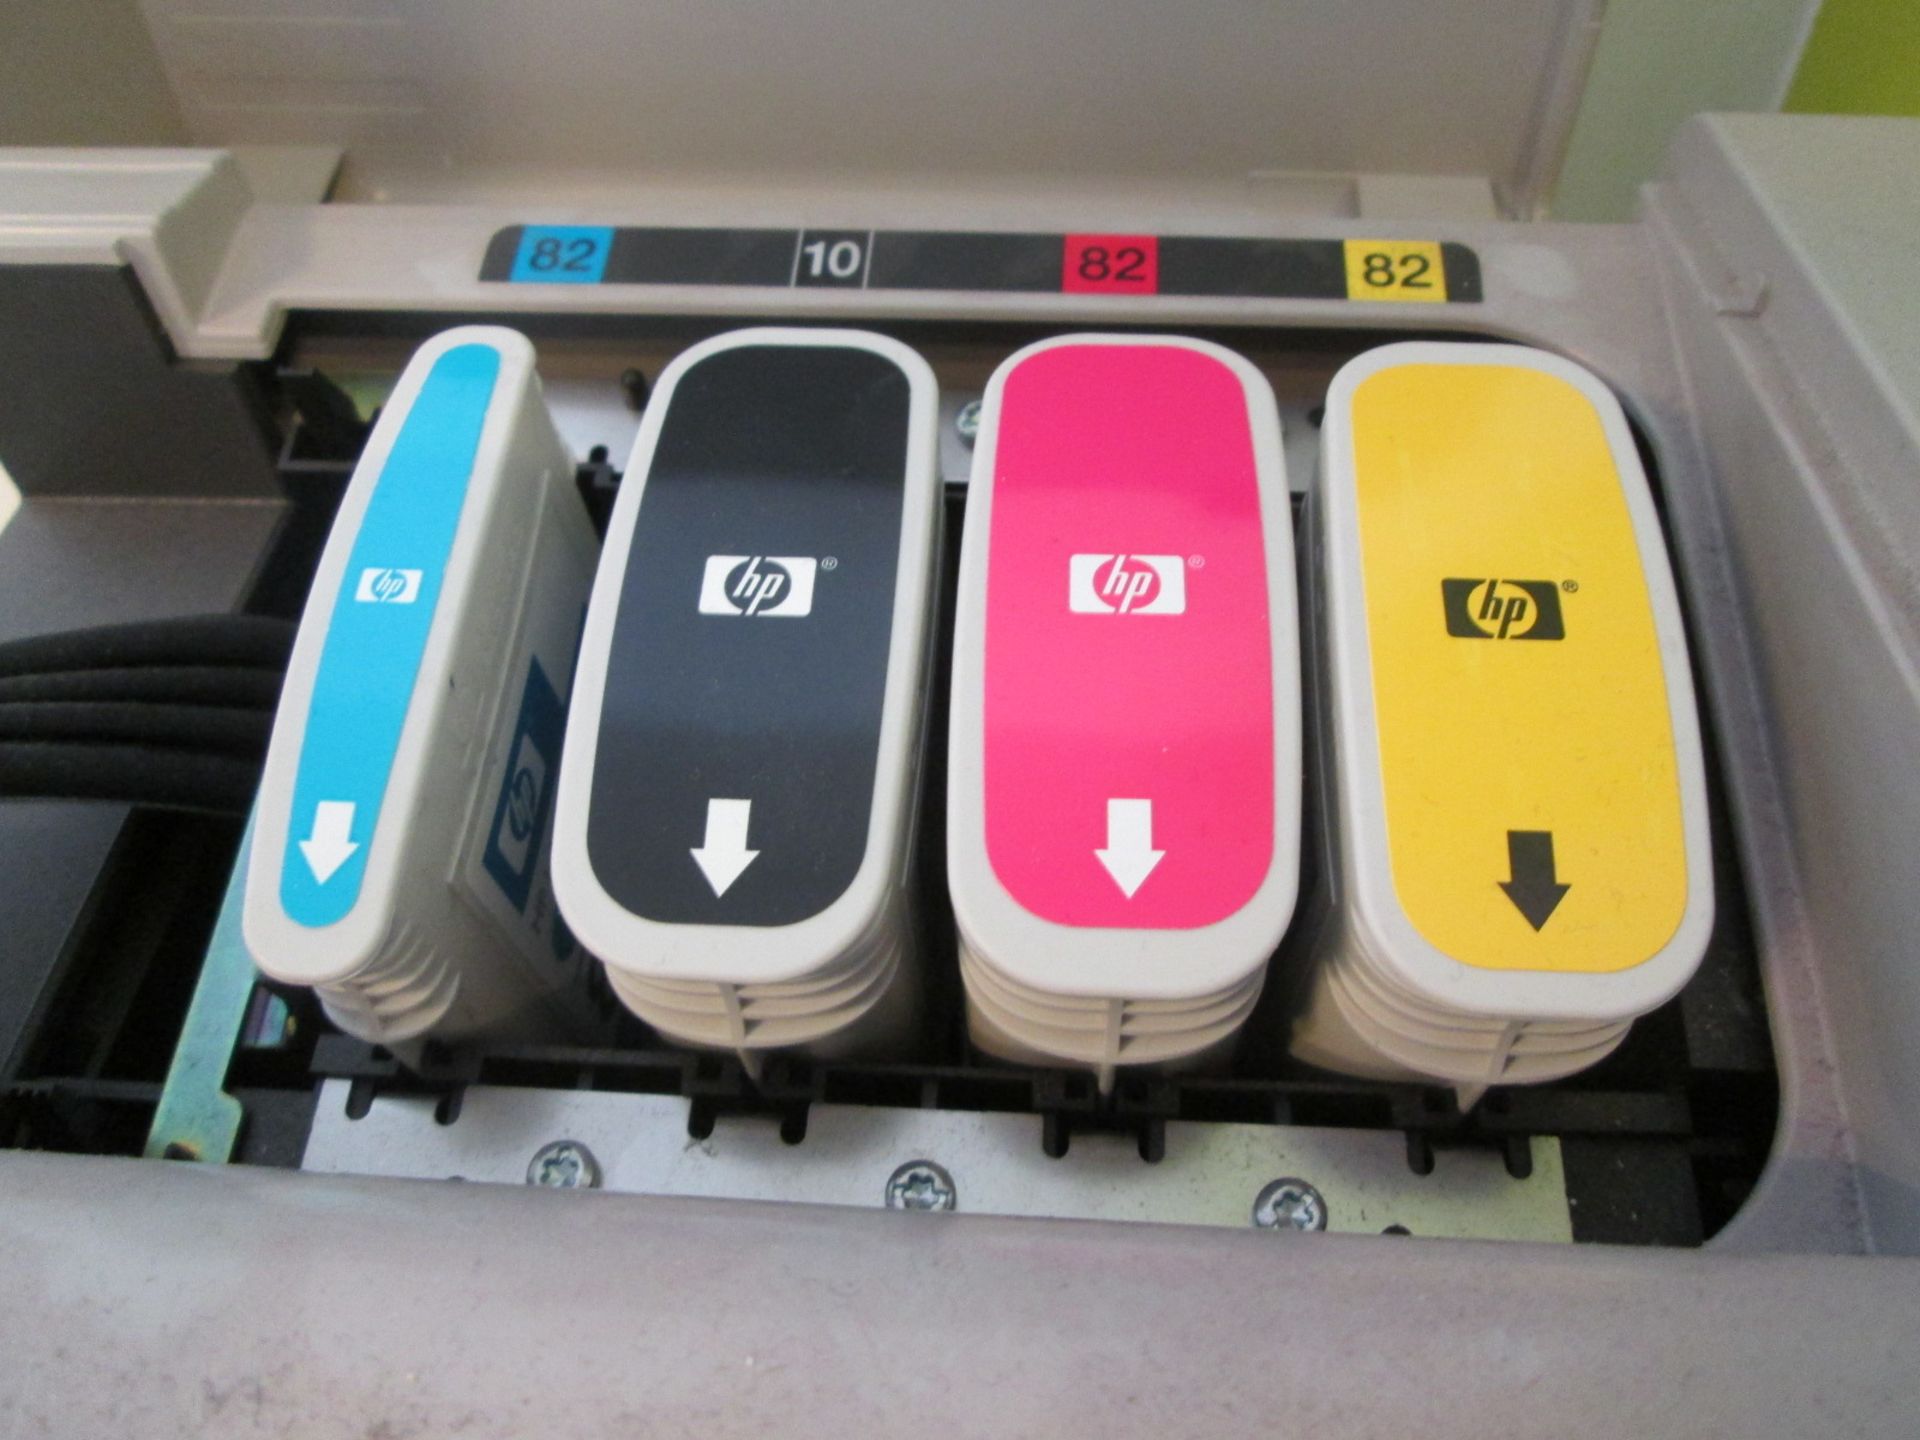 HP Designjet 500 A0 Colour Printer. S/N SG478103F. Model # C7770B - Image 4 of 6